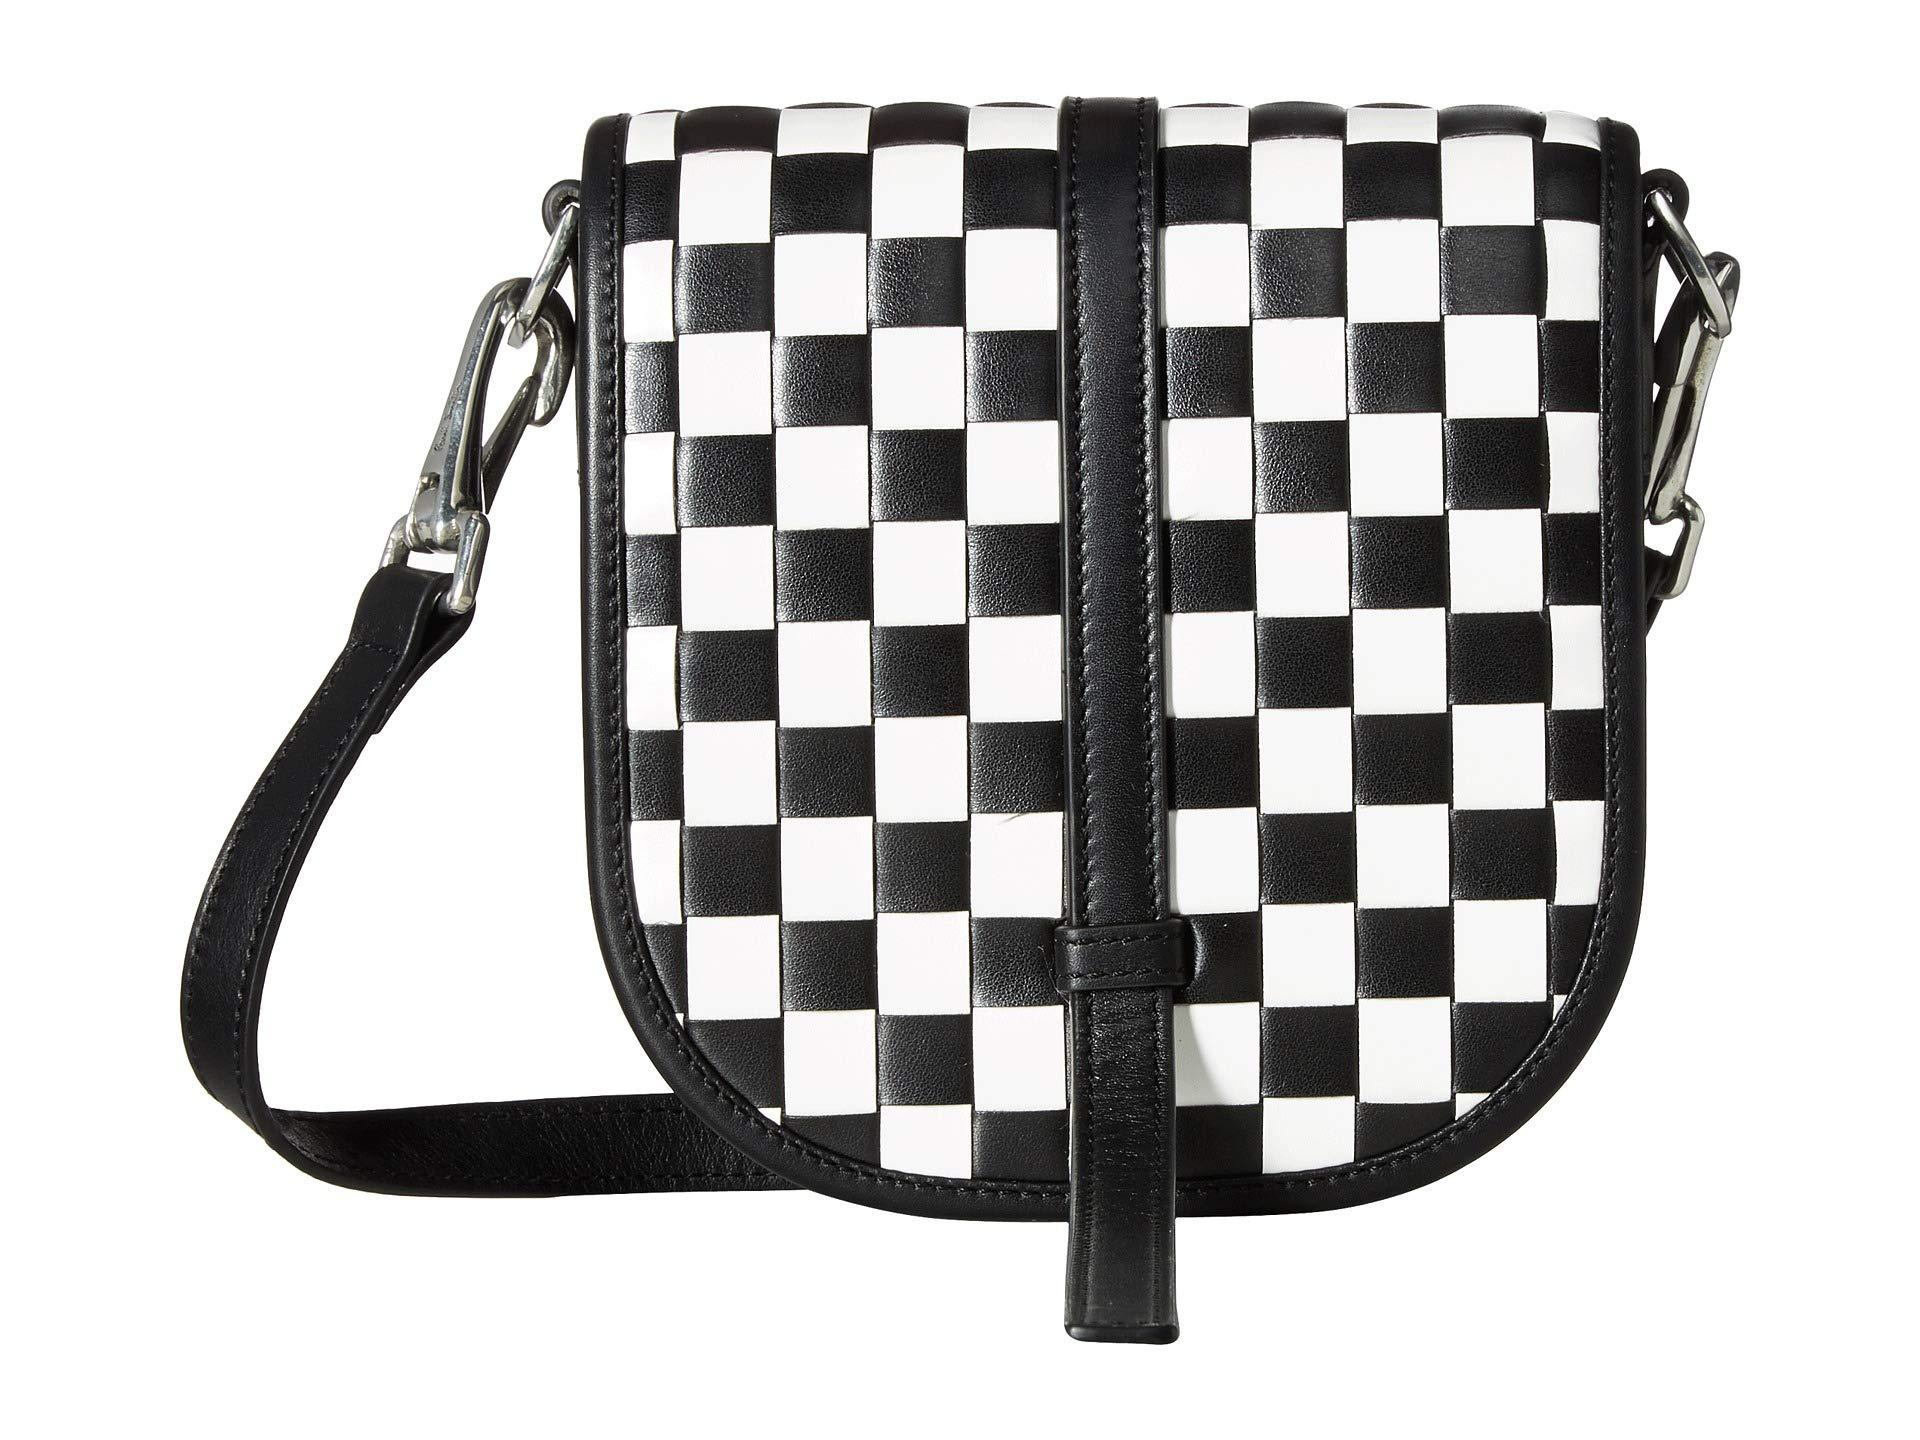 Lyst - Paul Smith Checkerboard Mini Satchel (black/white) Cross Body Handbags in Black